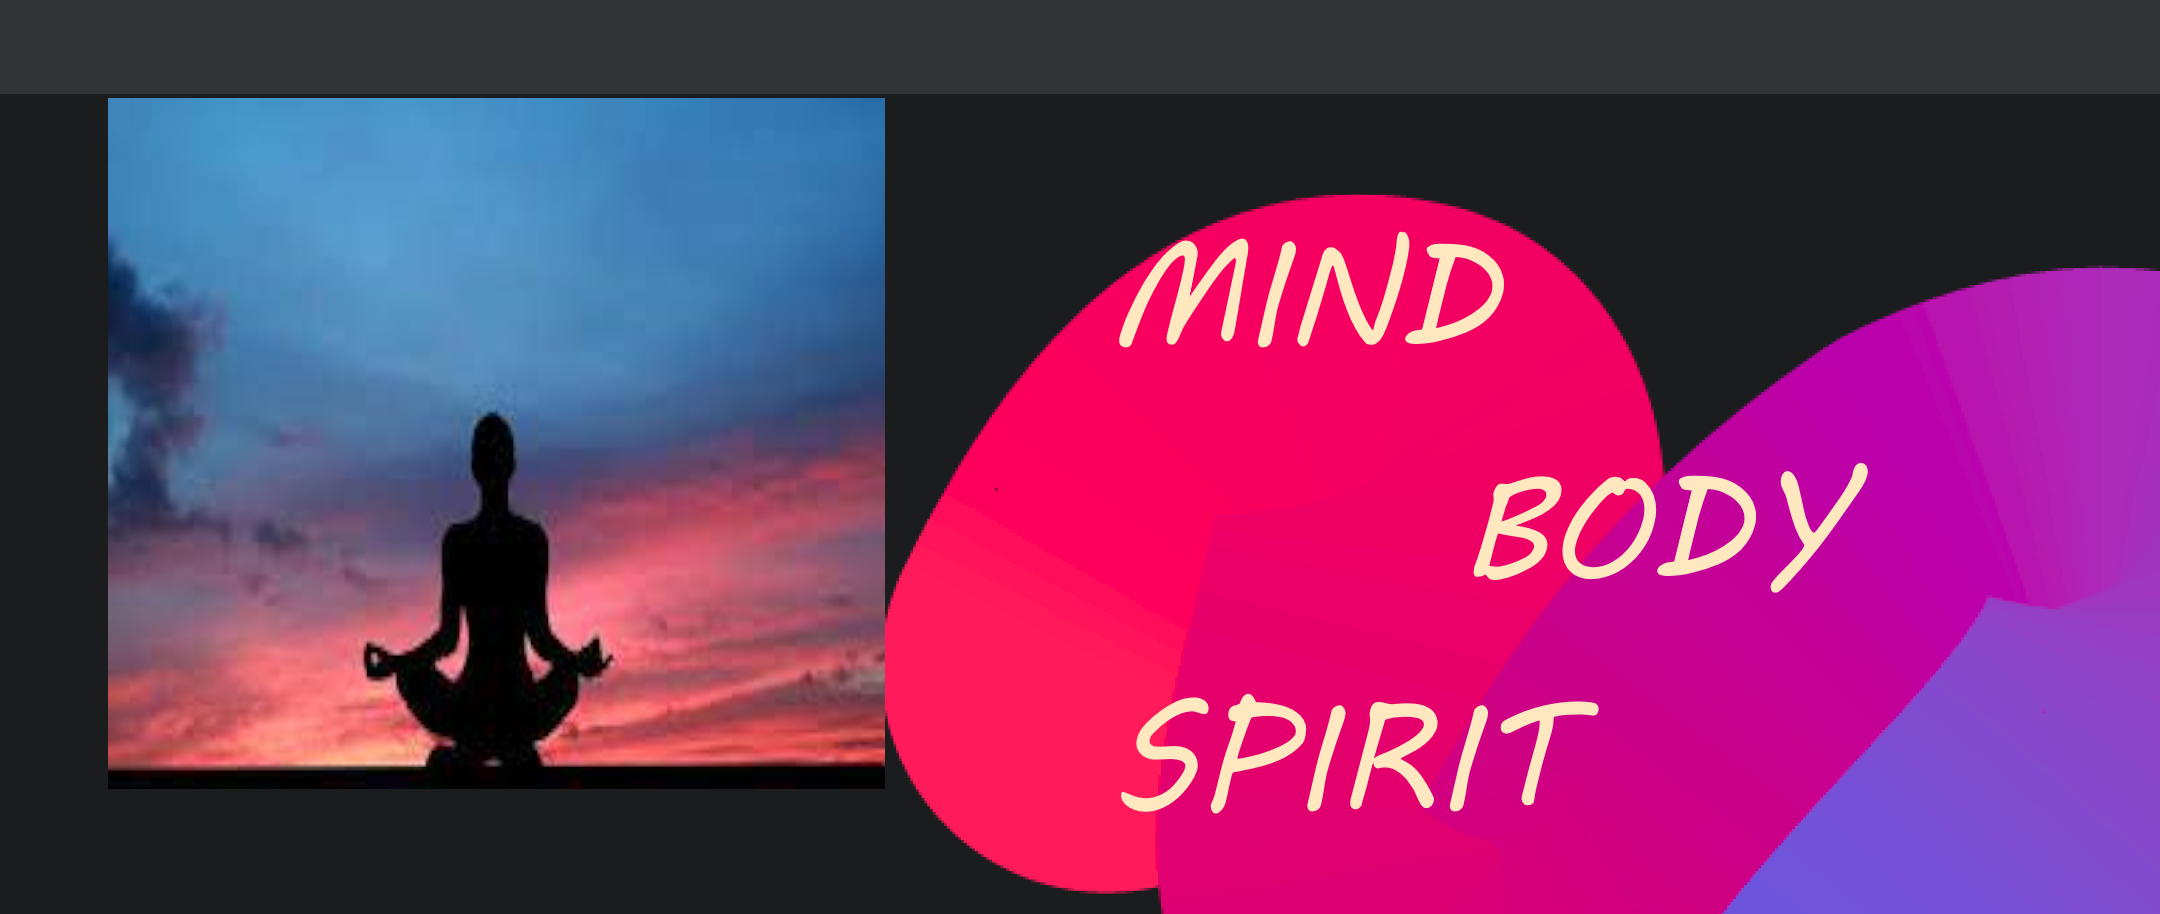 MIND body spirit energy healing reiki